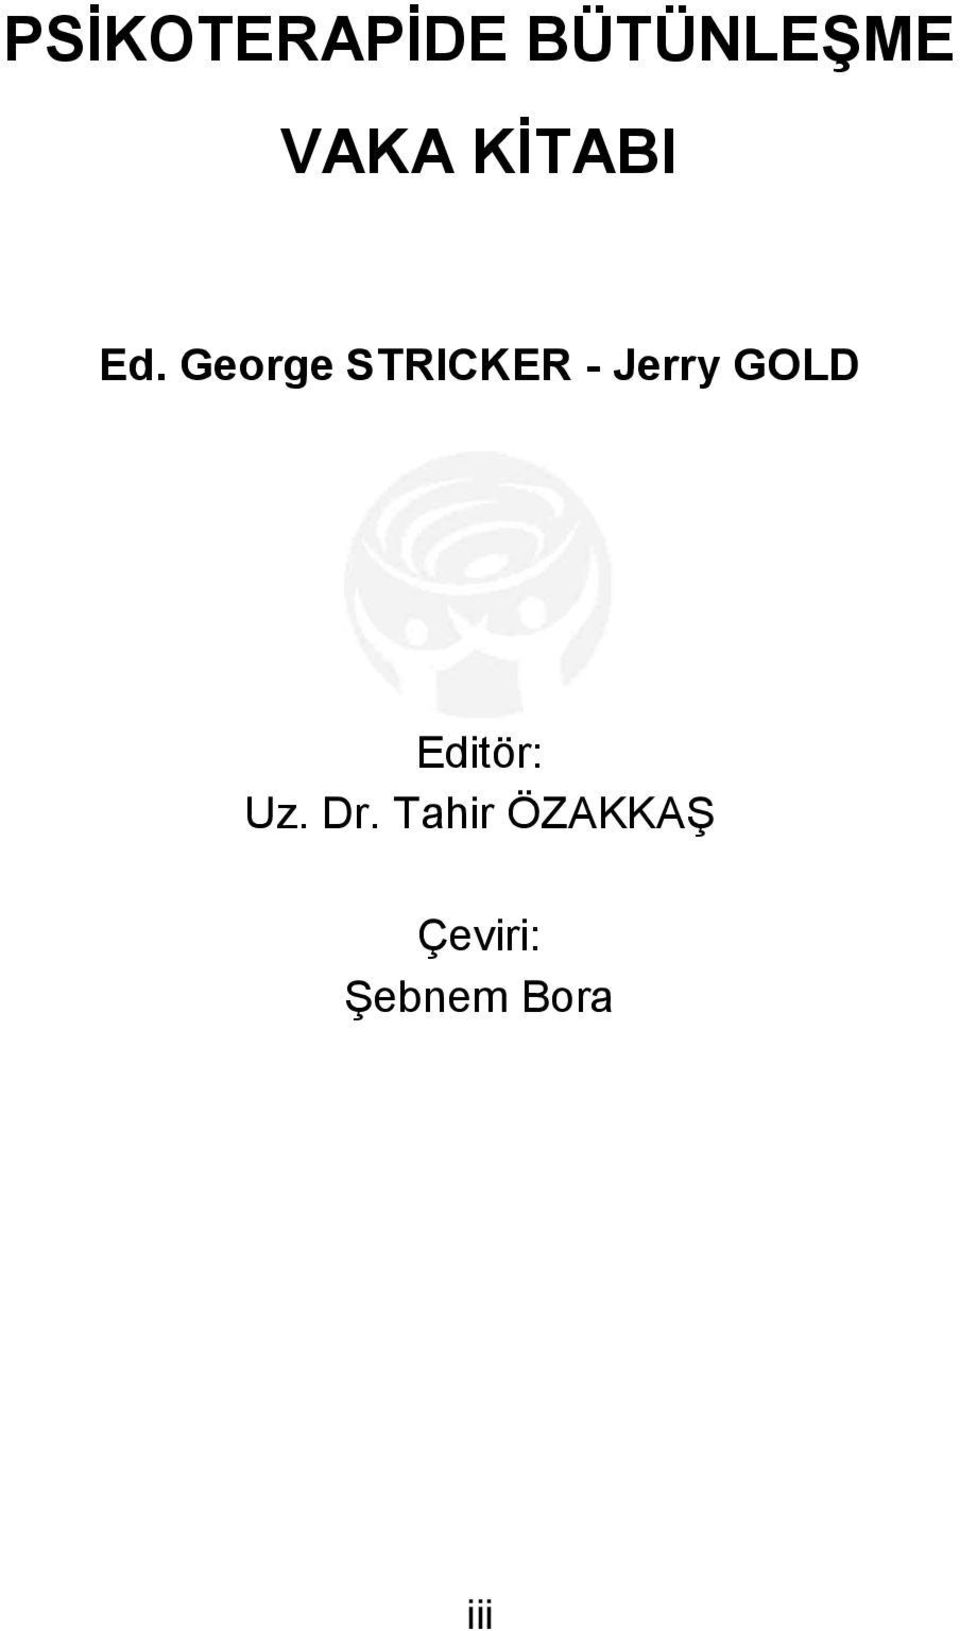 George STRICKER - Jerry GOLD